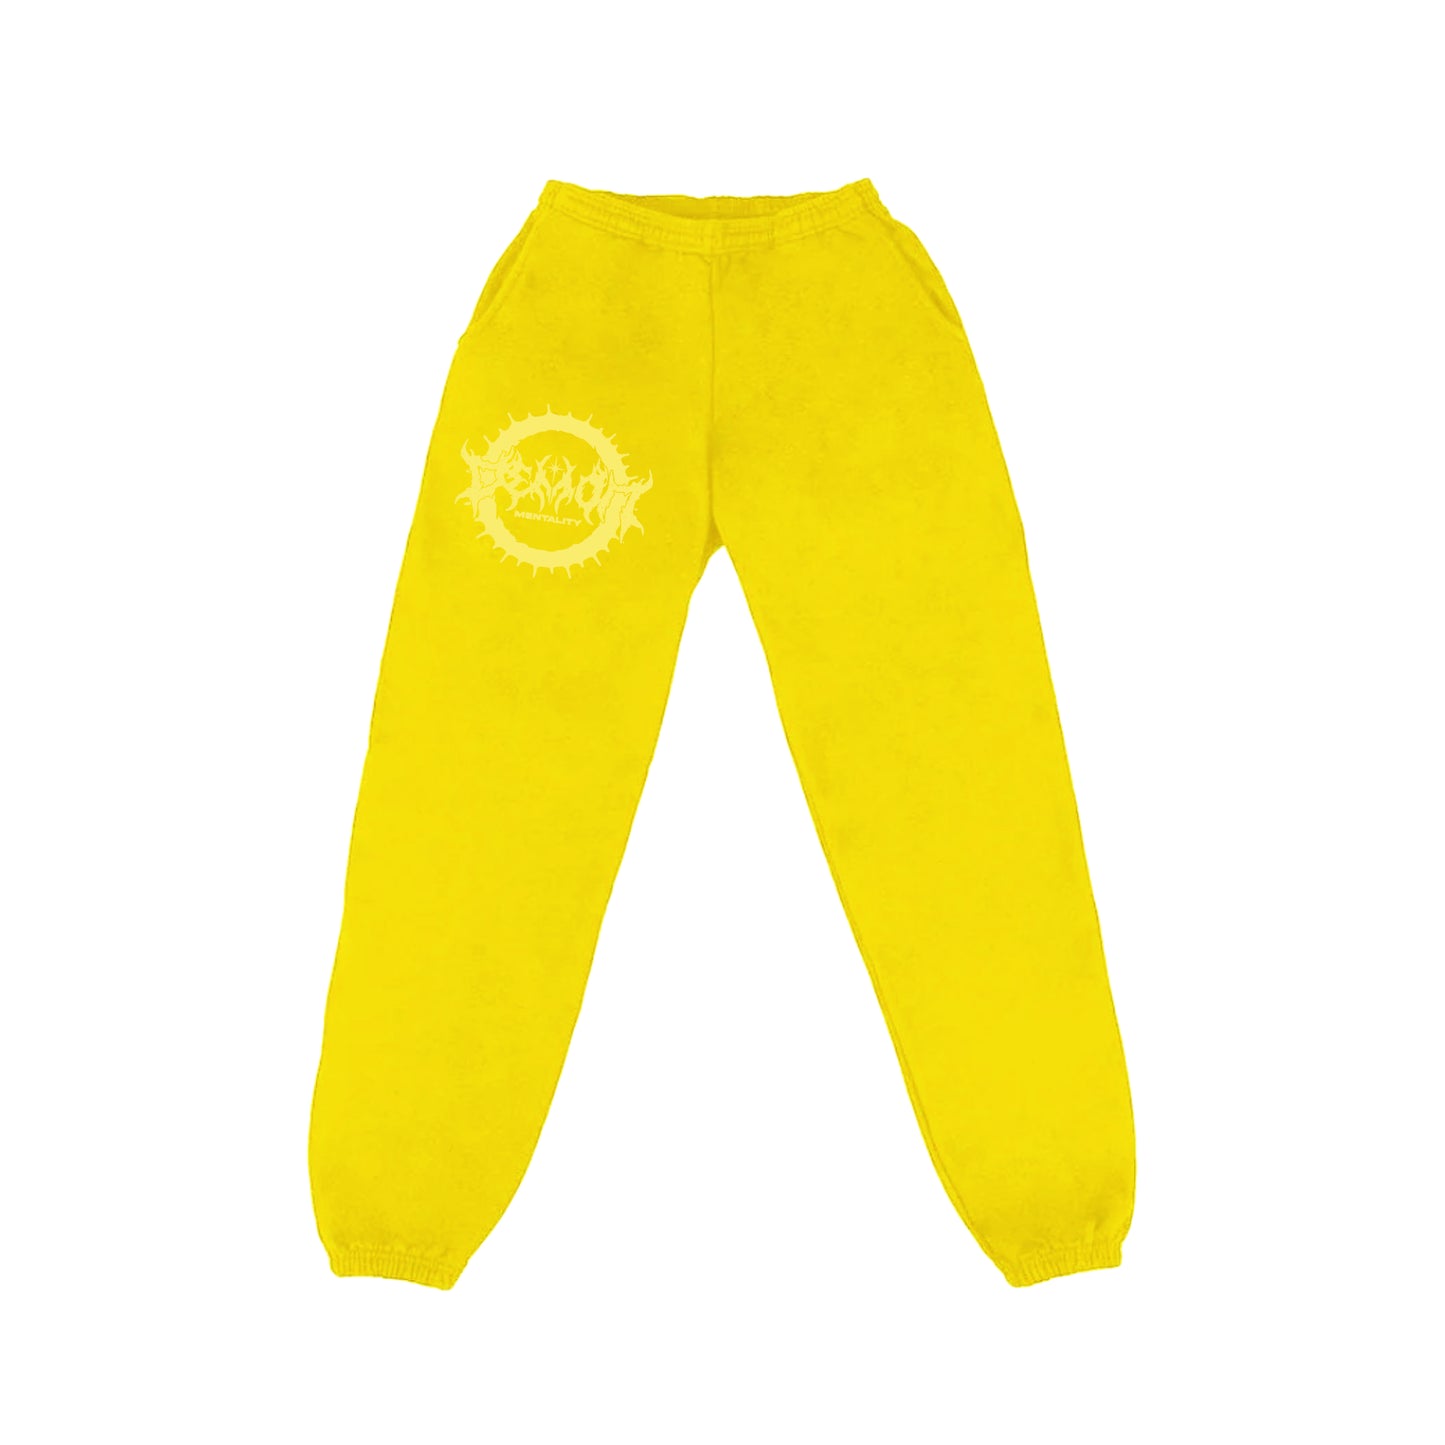 Lost Files Sweatpants (Yellow)